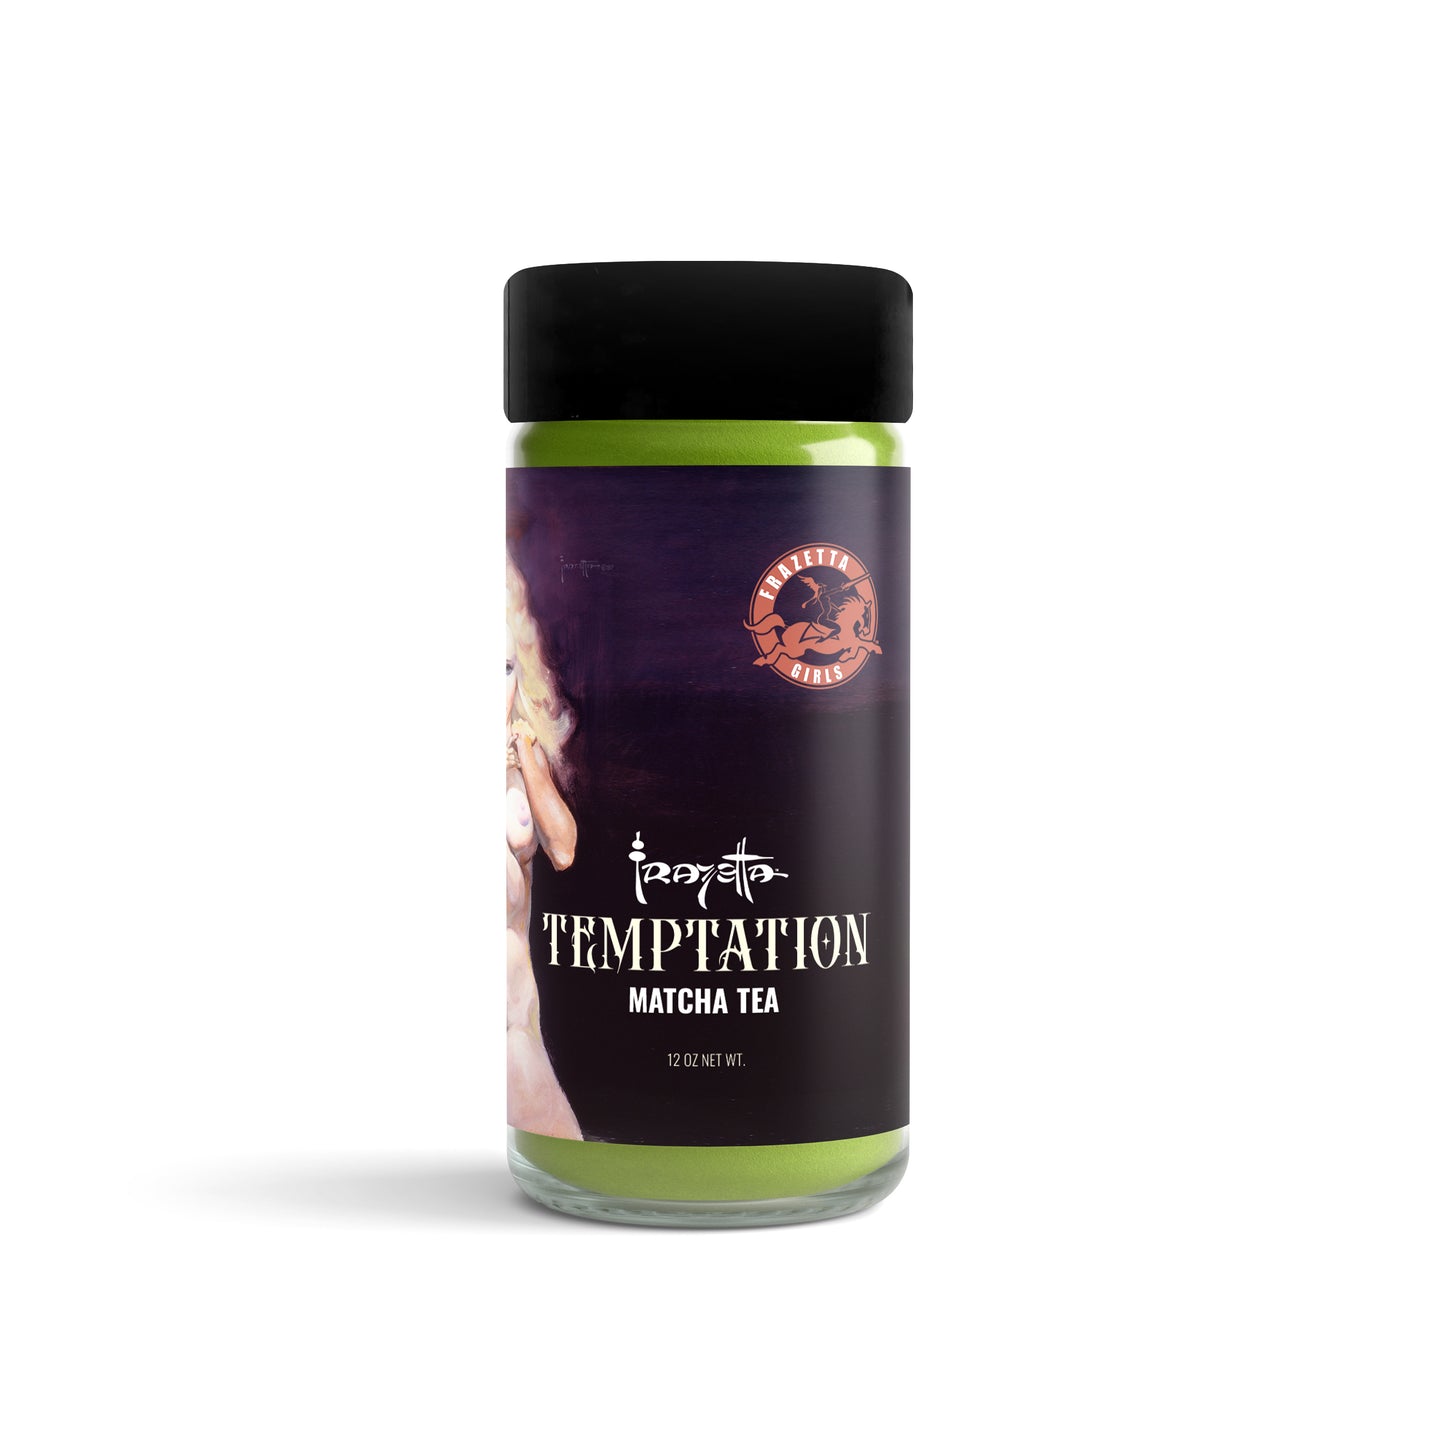 Temptation : Matcha Tea